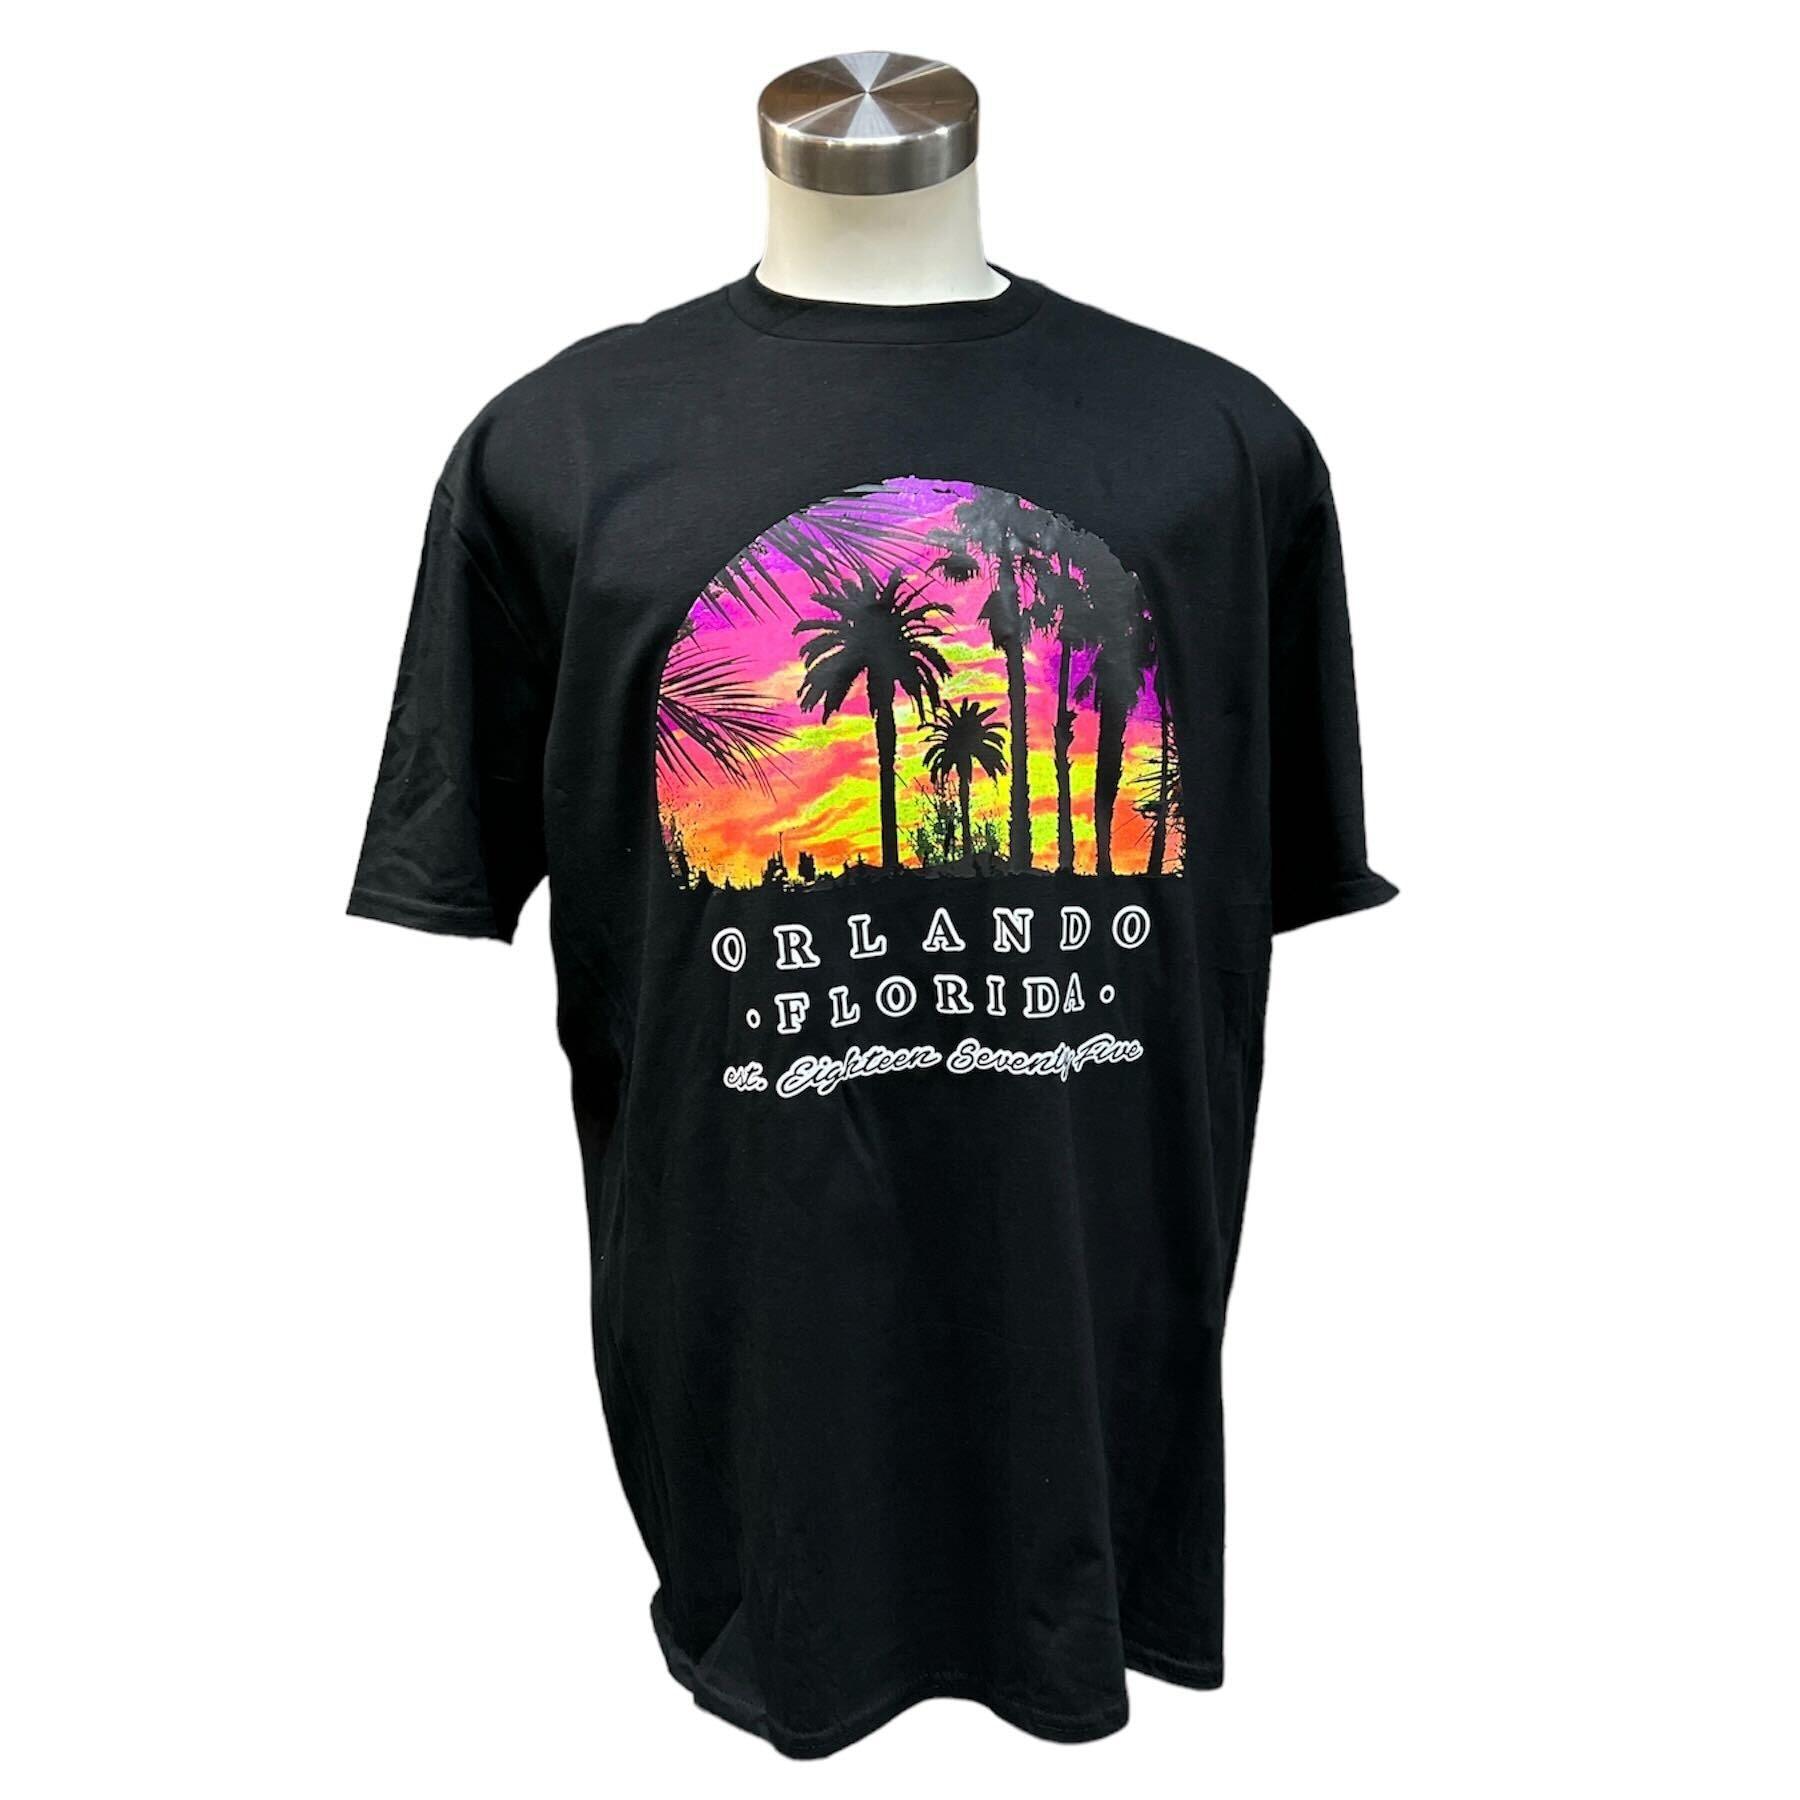 Orlando Florida Palm Trees Sunset Est. 1875 T-Shirt